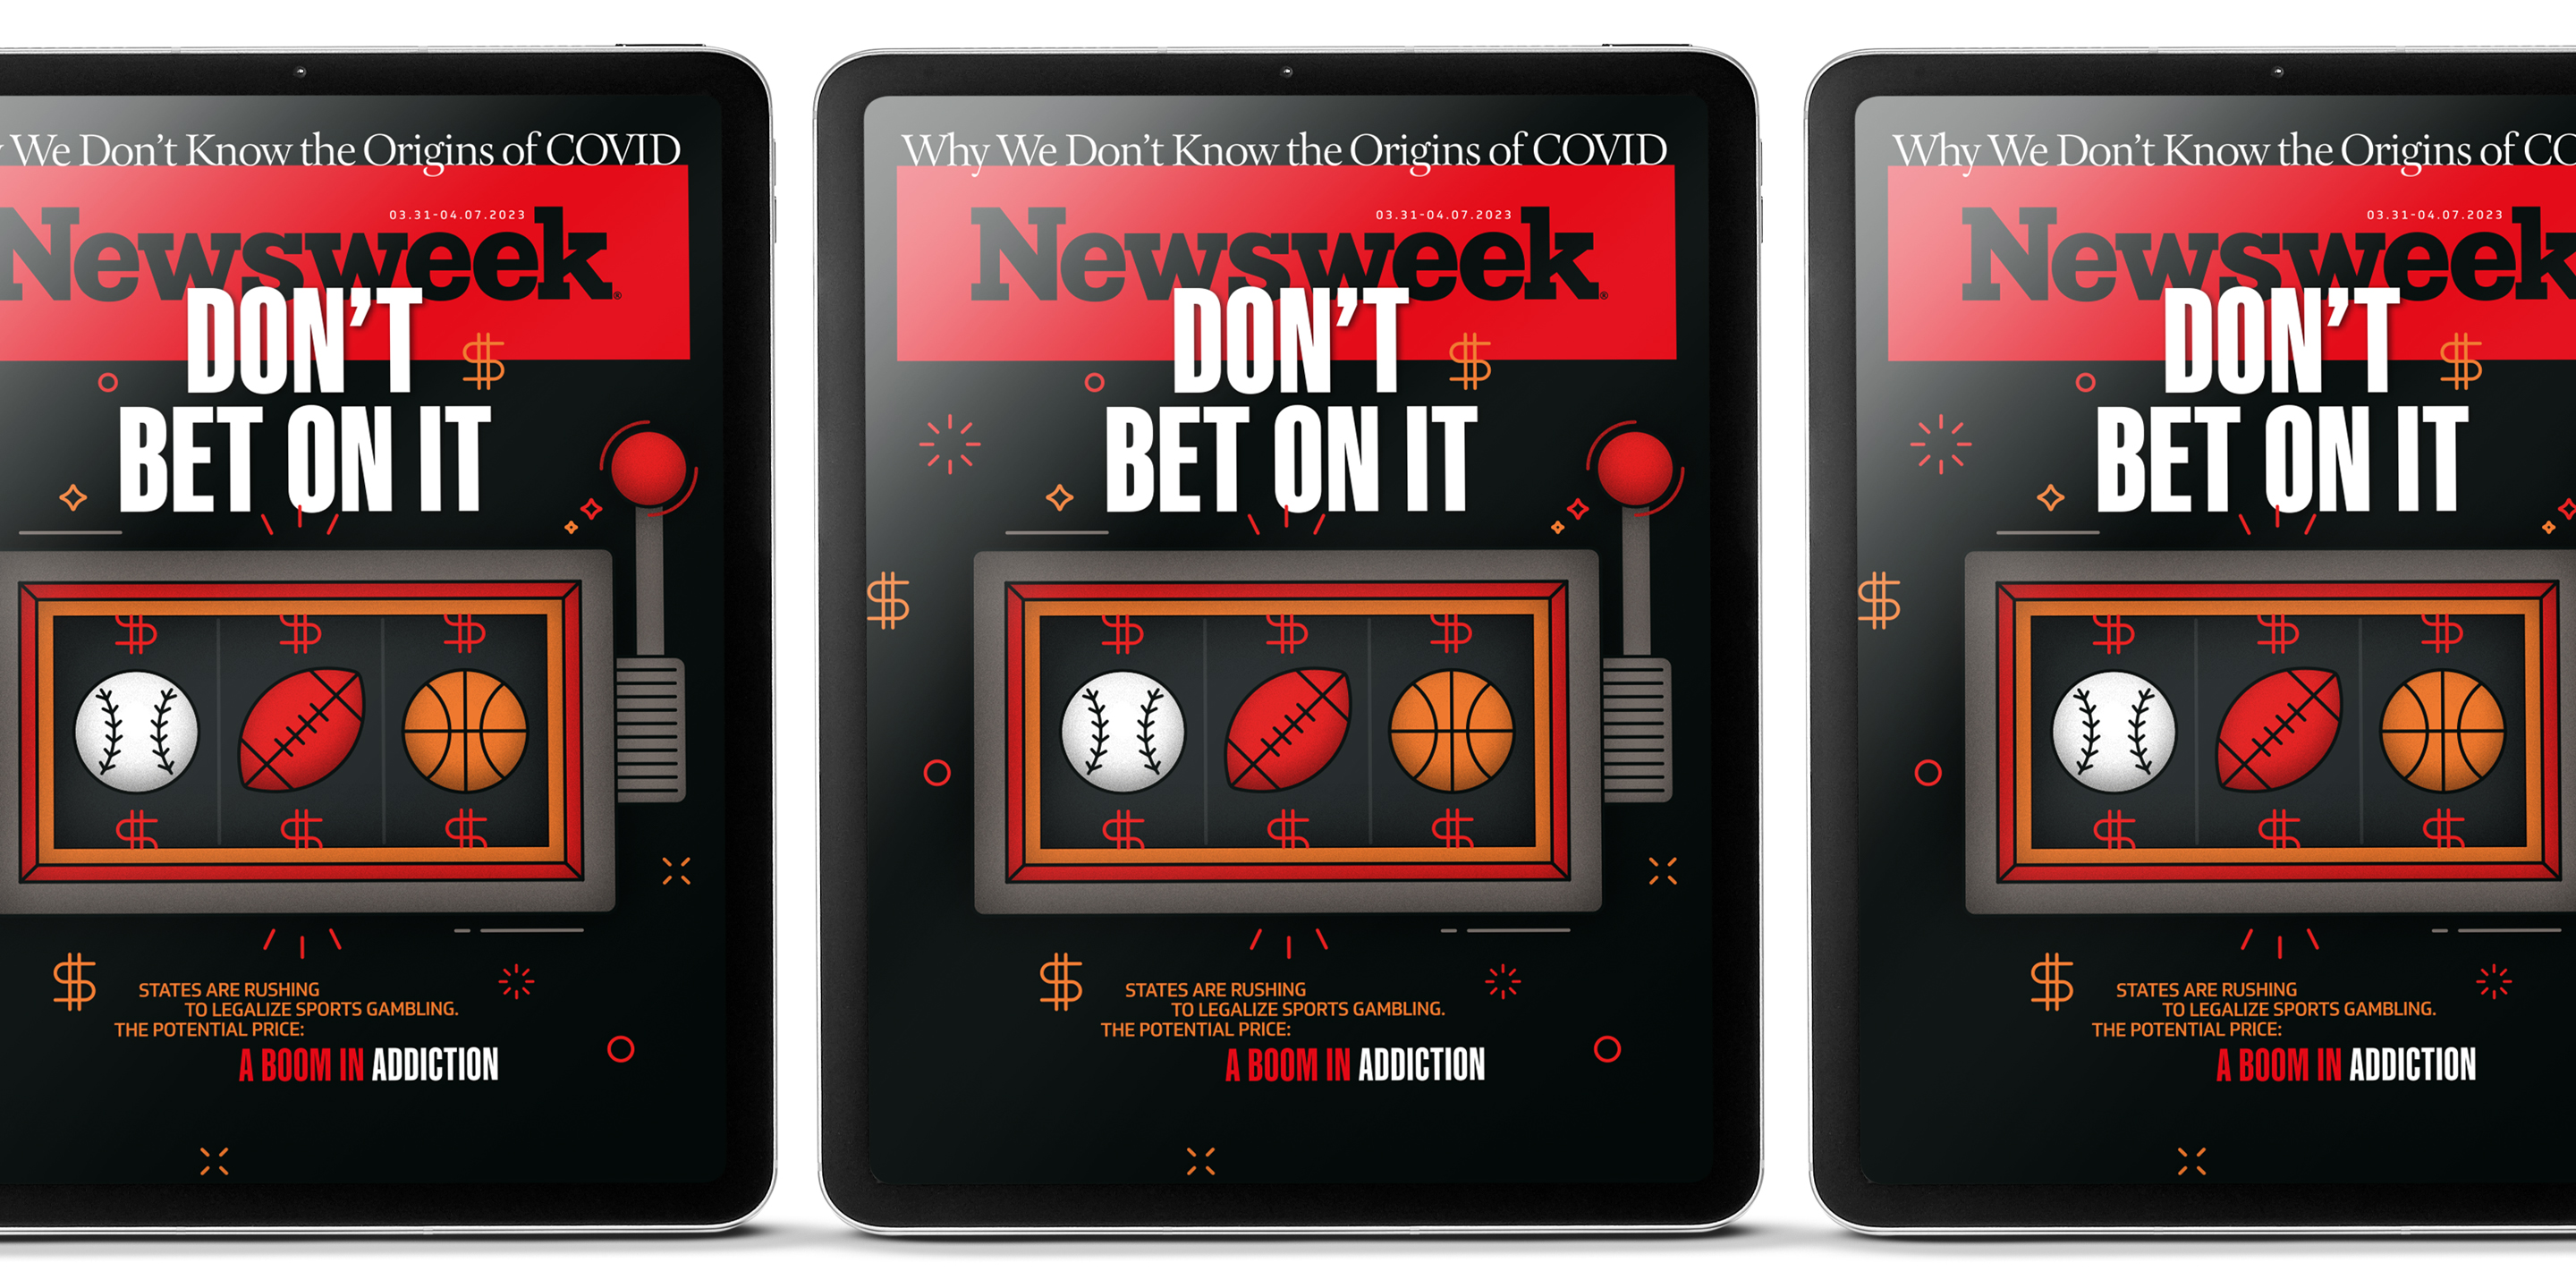 Is betting on sportsbooks addictive?